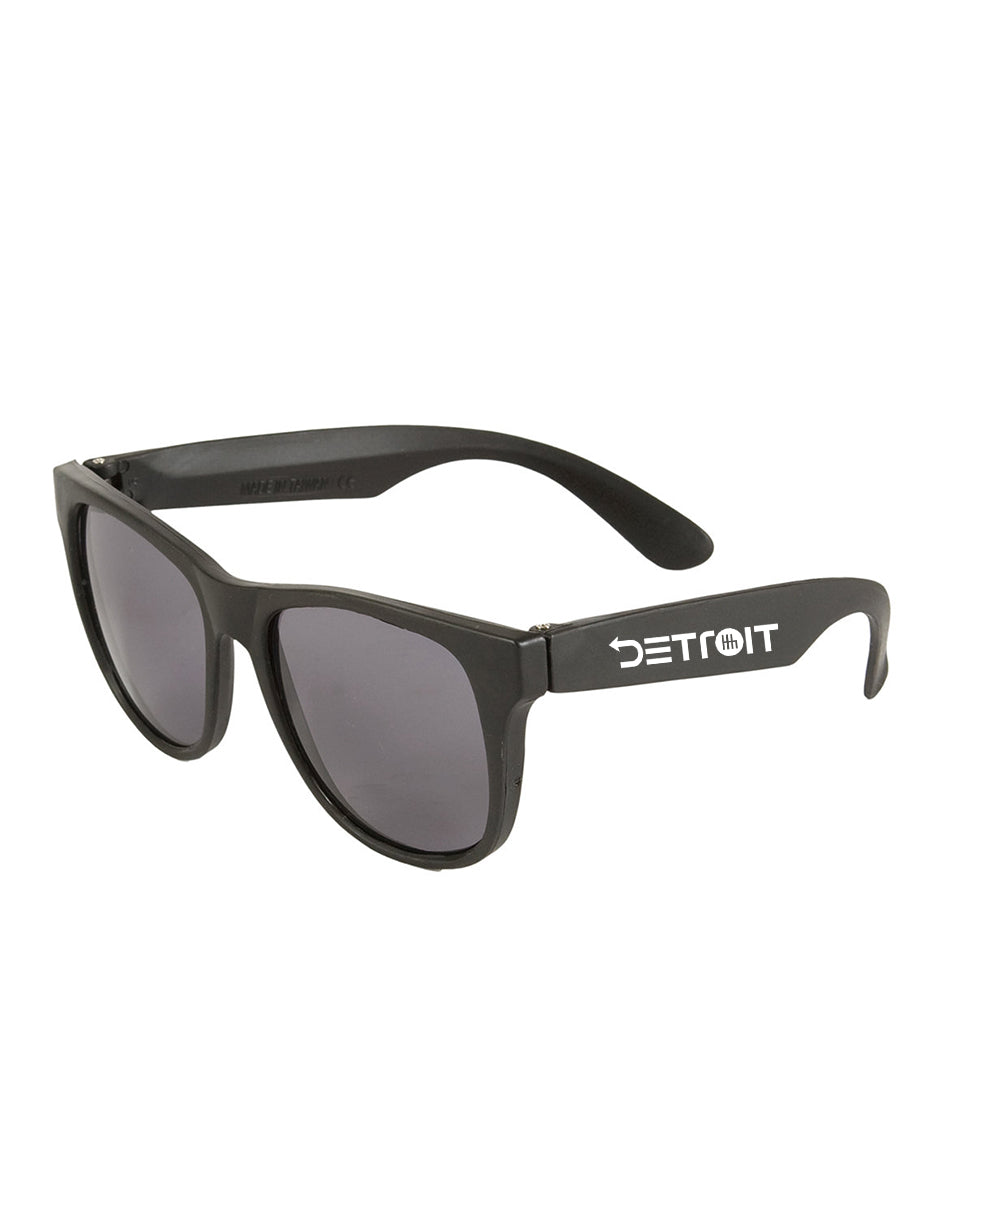 Detroit Sunglasses